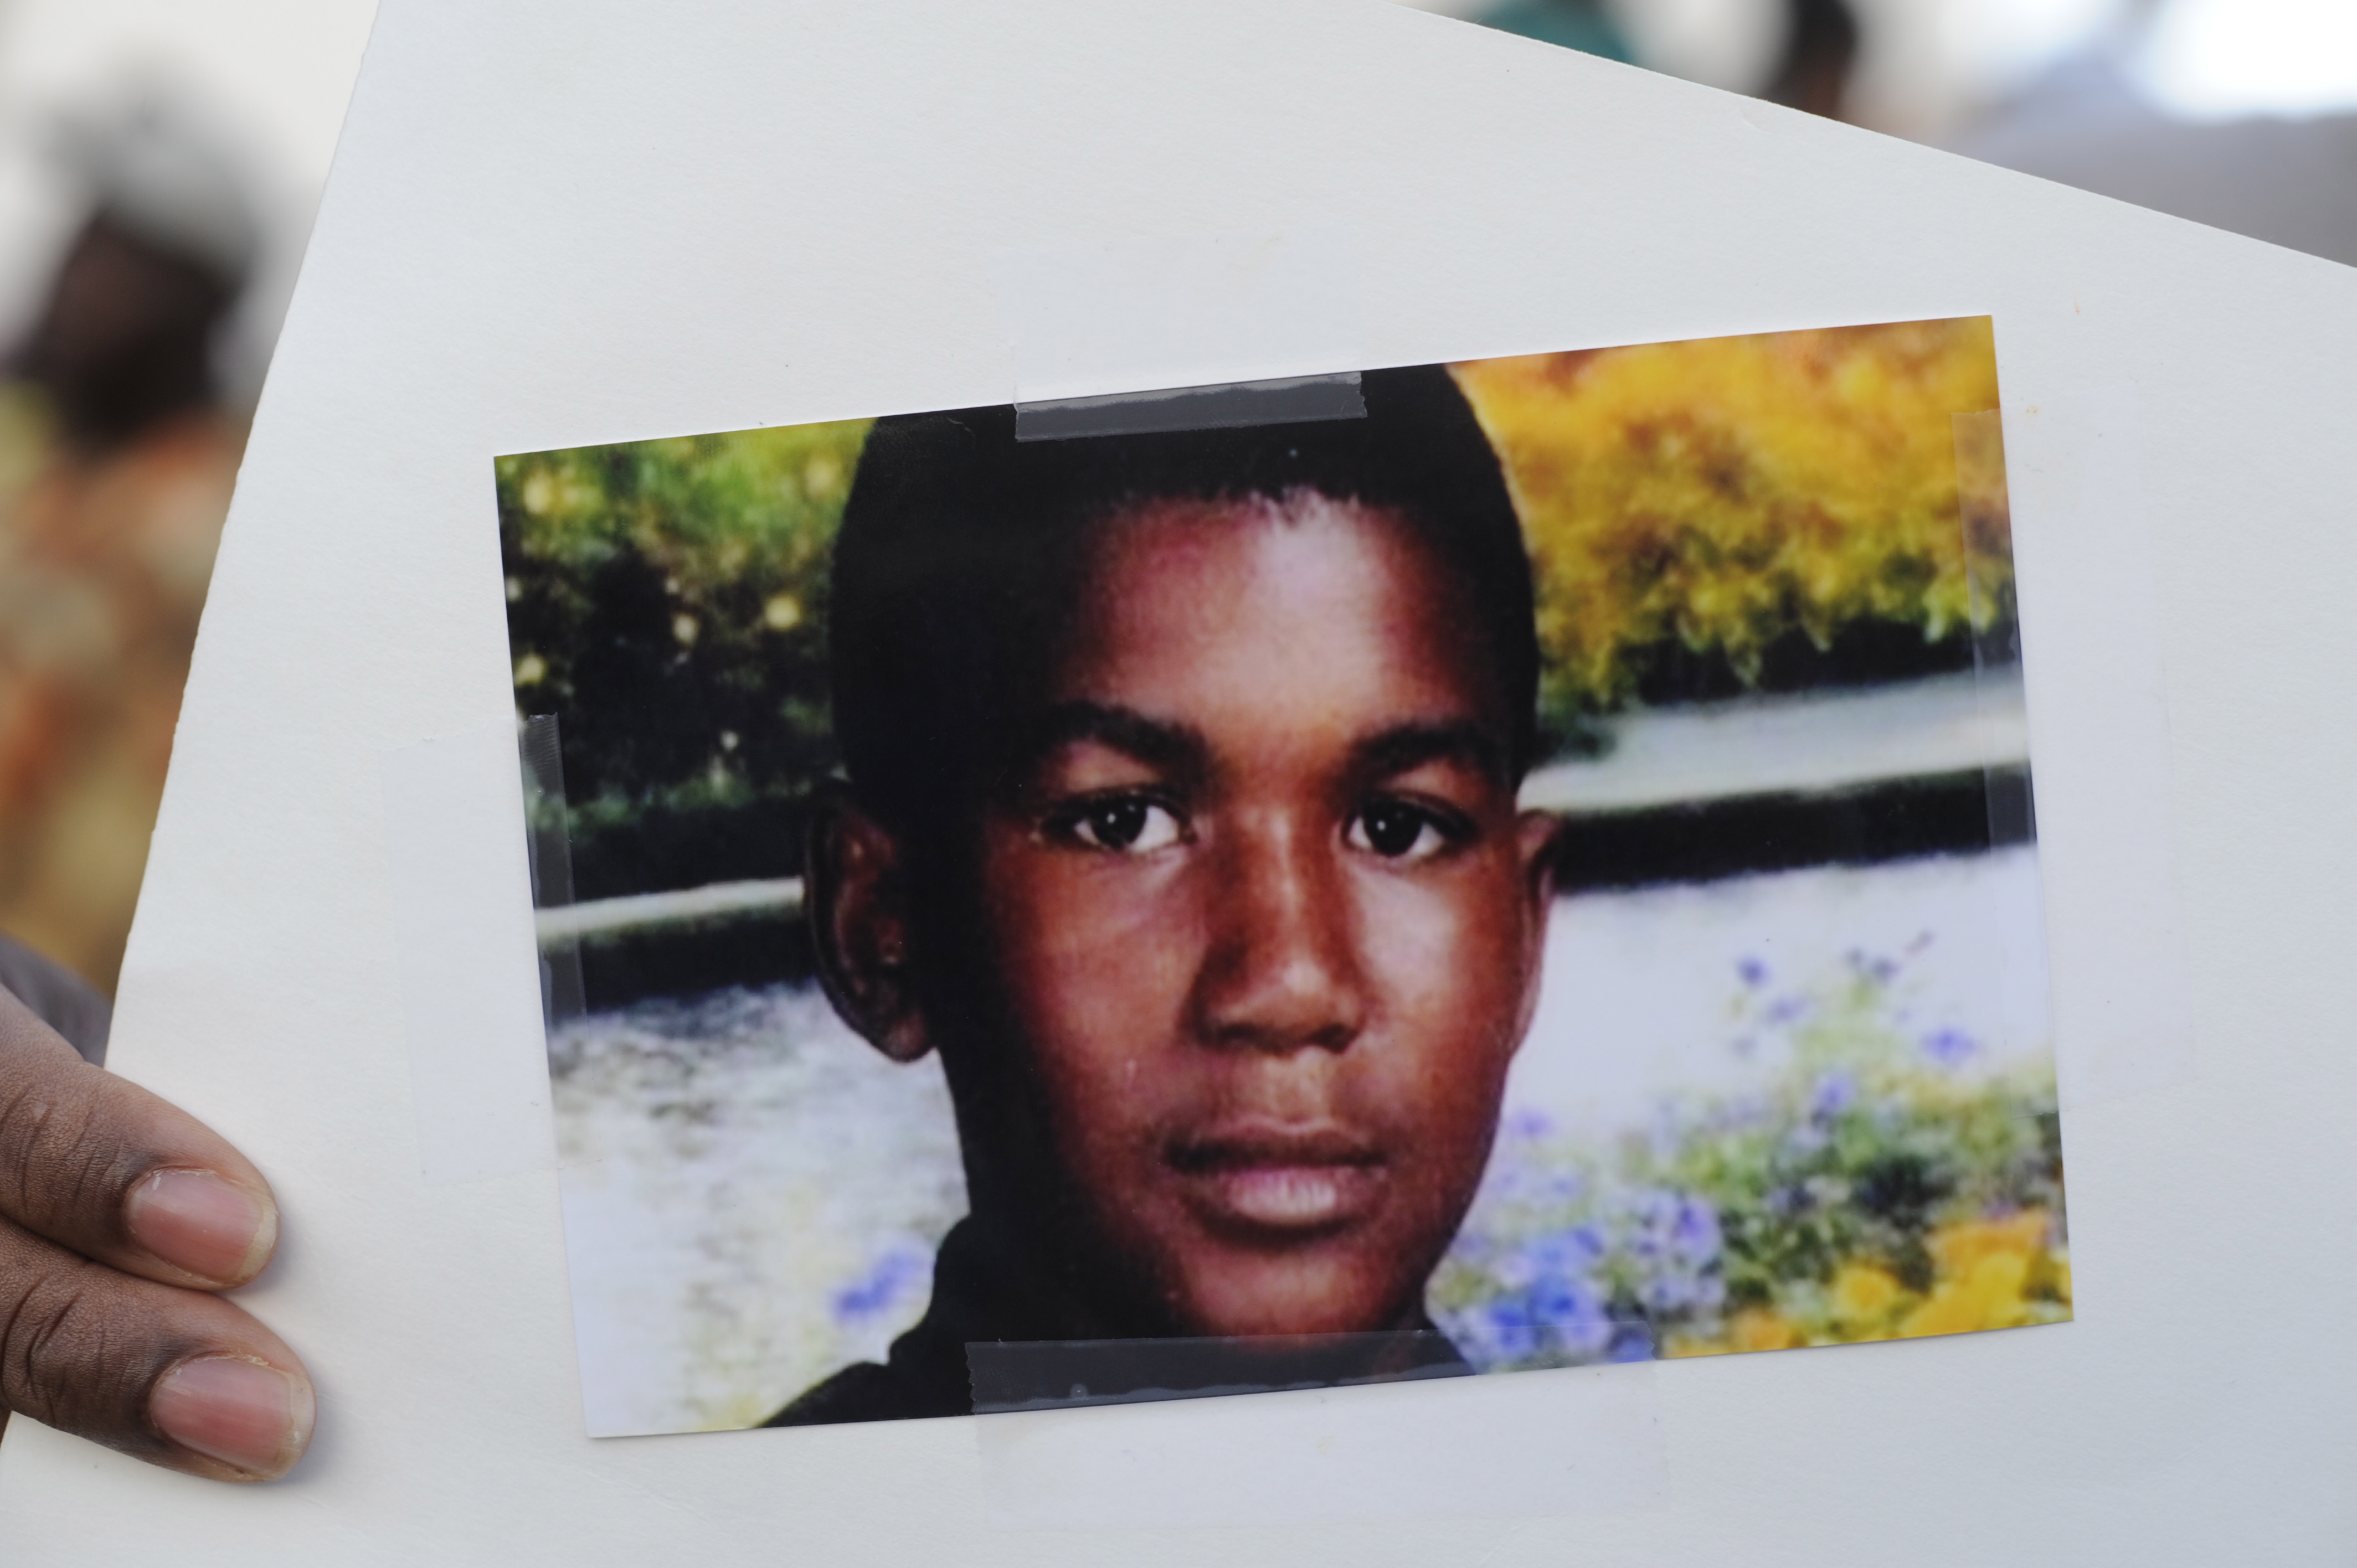 Trayvon Martin Story, Trayvon Martin, George Zimmerman, Zimmerman, Stand Your Ground, African American Activist, African American News, African American Politics, Local Politics, KOLUMN Magazine, KOLUMN, KINDR'D Magazine, KINDR'D